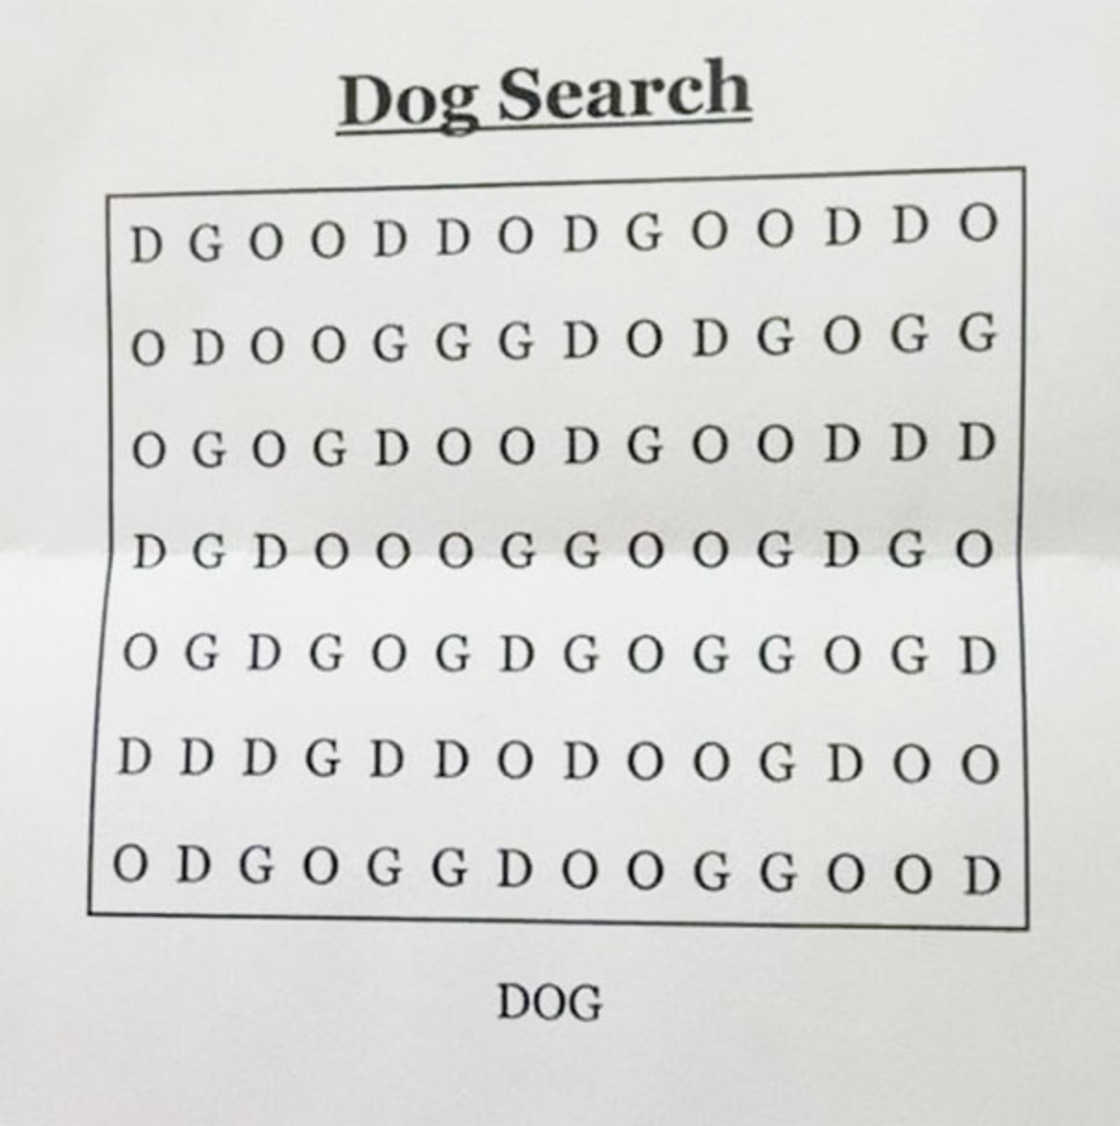 dog search - Dog Search D Good Dod Good Do Odo Og Ggdod Gogg Og Og Dood Go O Ddd D G Doo O G Go O G D Go Og D G O G D Gogg Og D G D D 0 D 0 0 G D 0 0 Od Go G Gdo O G Good Dog